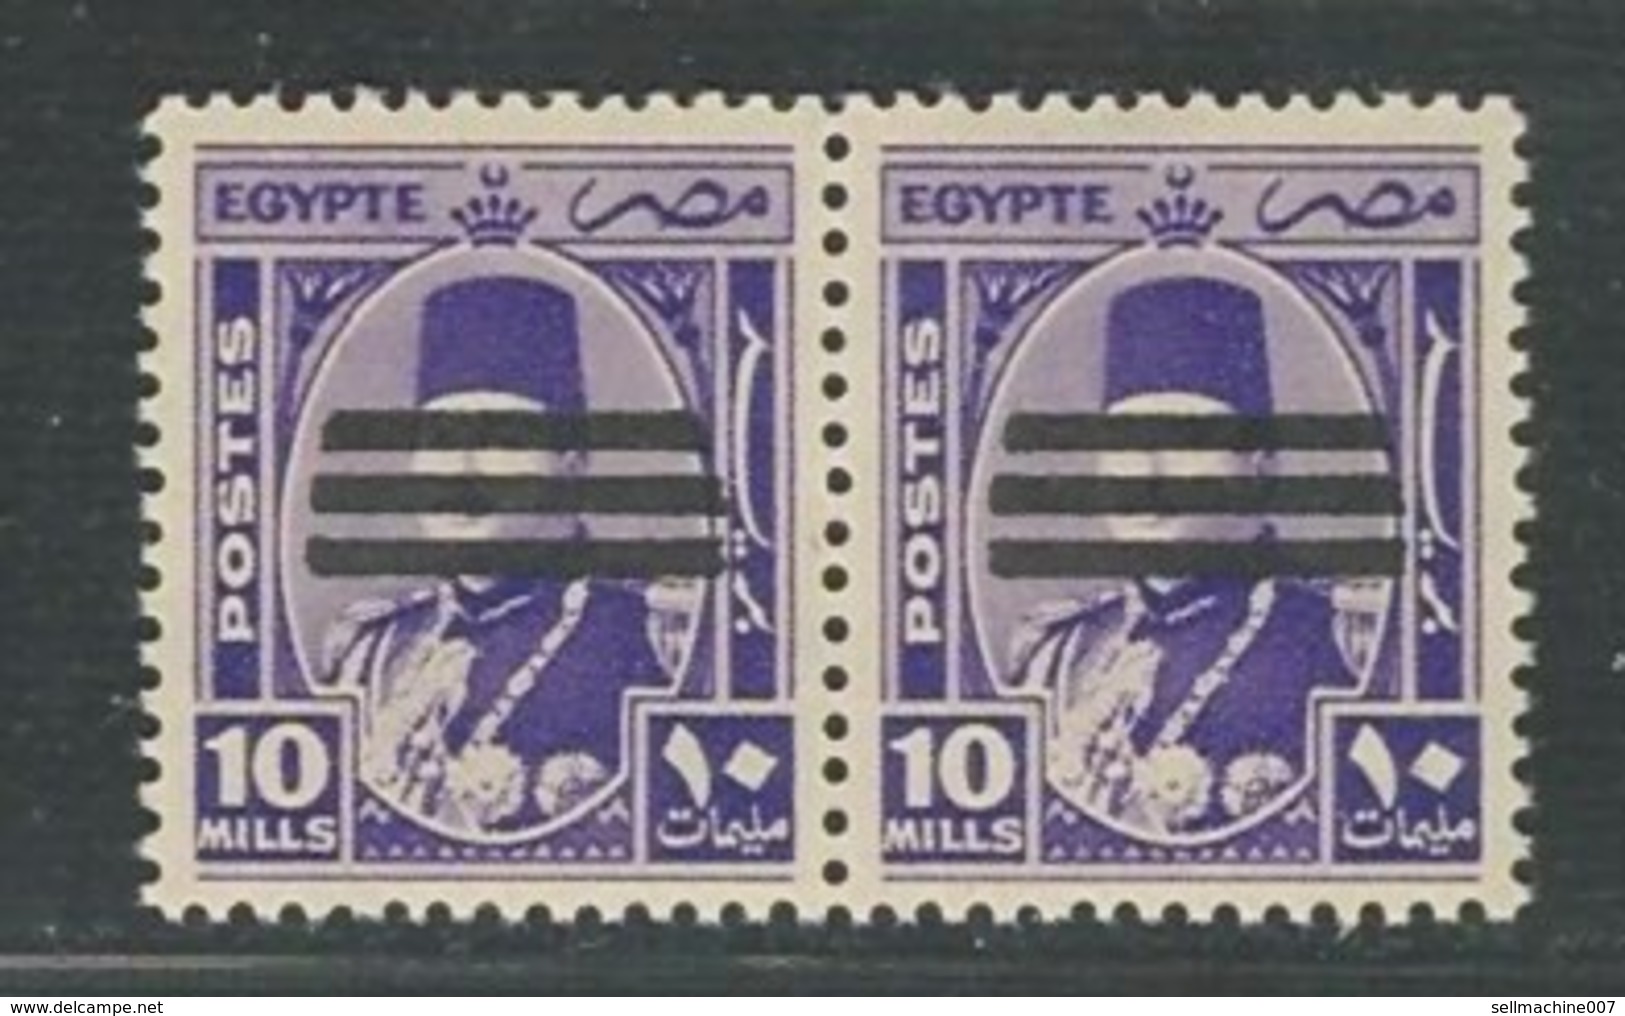 Egypt Kingdom Postage 1953-10 Mills MNH PAIR Stamp - King Farouk MARSHALL Ovpt 3 Bars/bar Obliterate Portrait- MARSAHL - Neufs